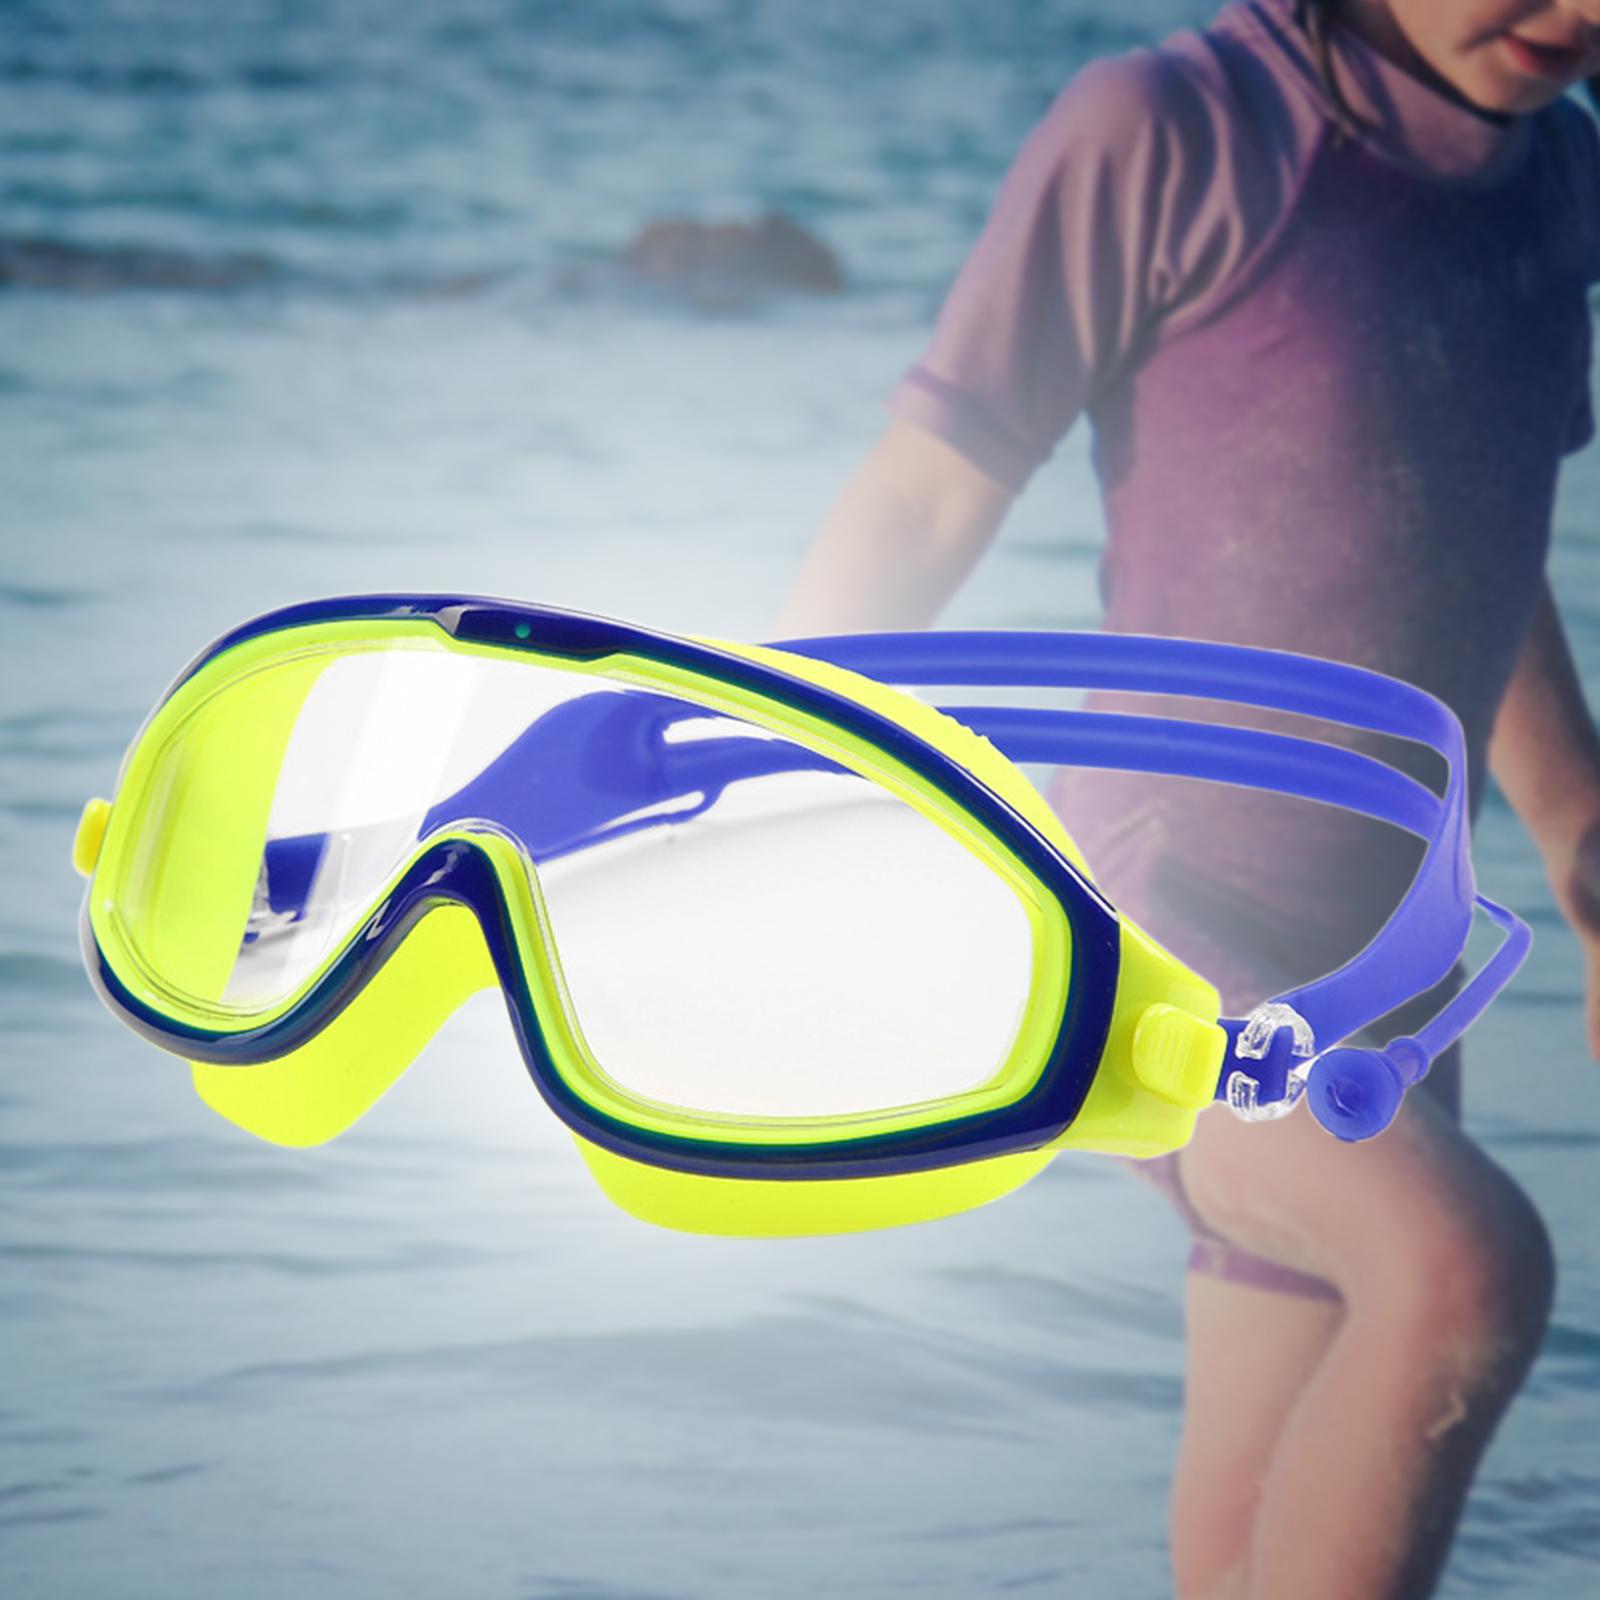 Kids Swim Goggles with Earplug Adjustable for Kids 6-14 Teenagers Boys Girls Yellow